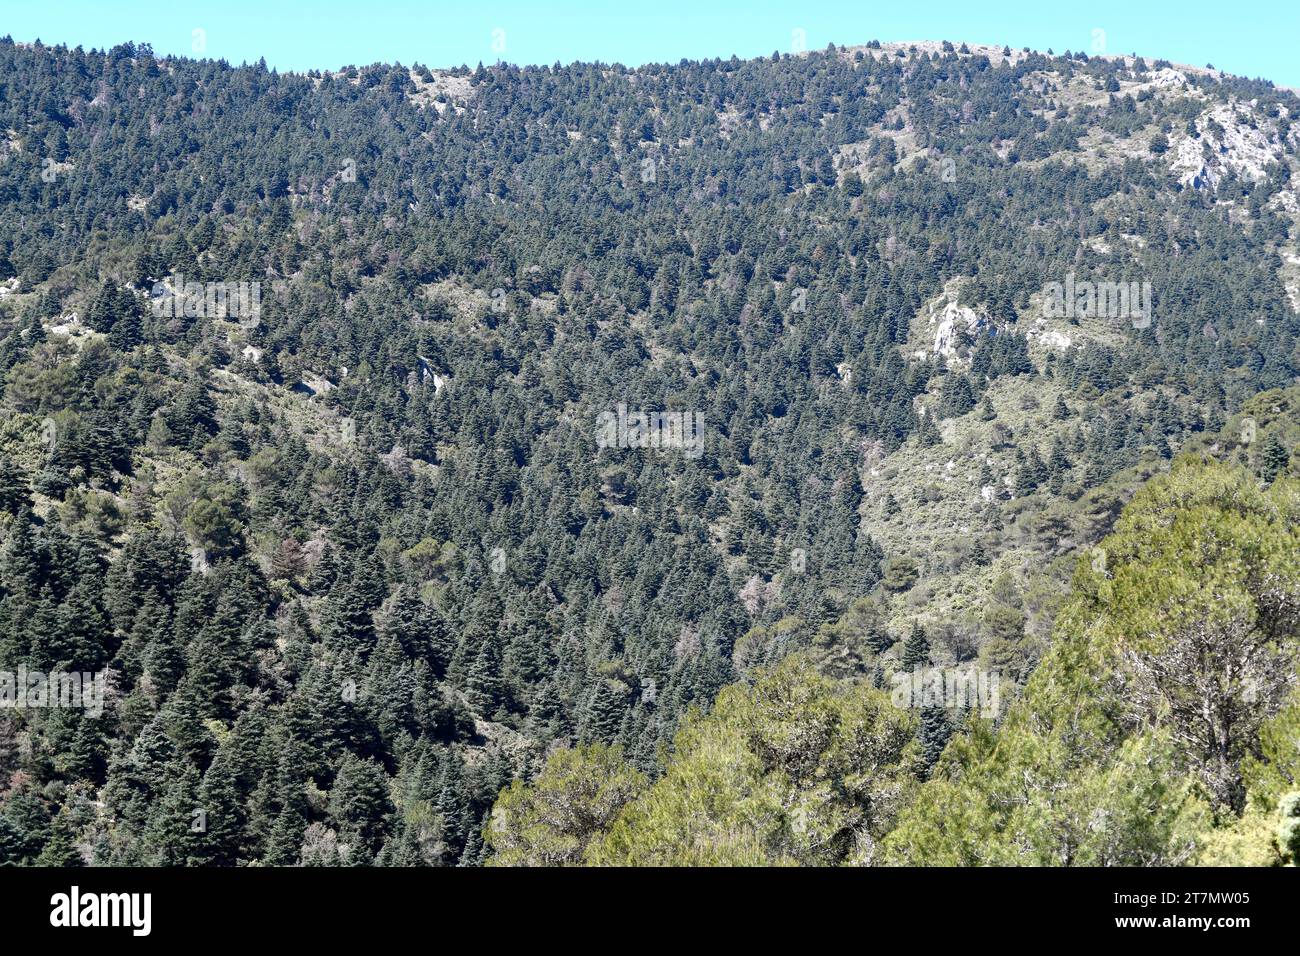 Spanish fir or pinsapo (Abies pinsapo) evergreen tree endemic to Mountains of Cadiz and Malaga. This photo was taken in Los Lajares, Sierra de las Nie Stock Photo